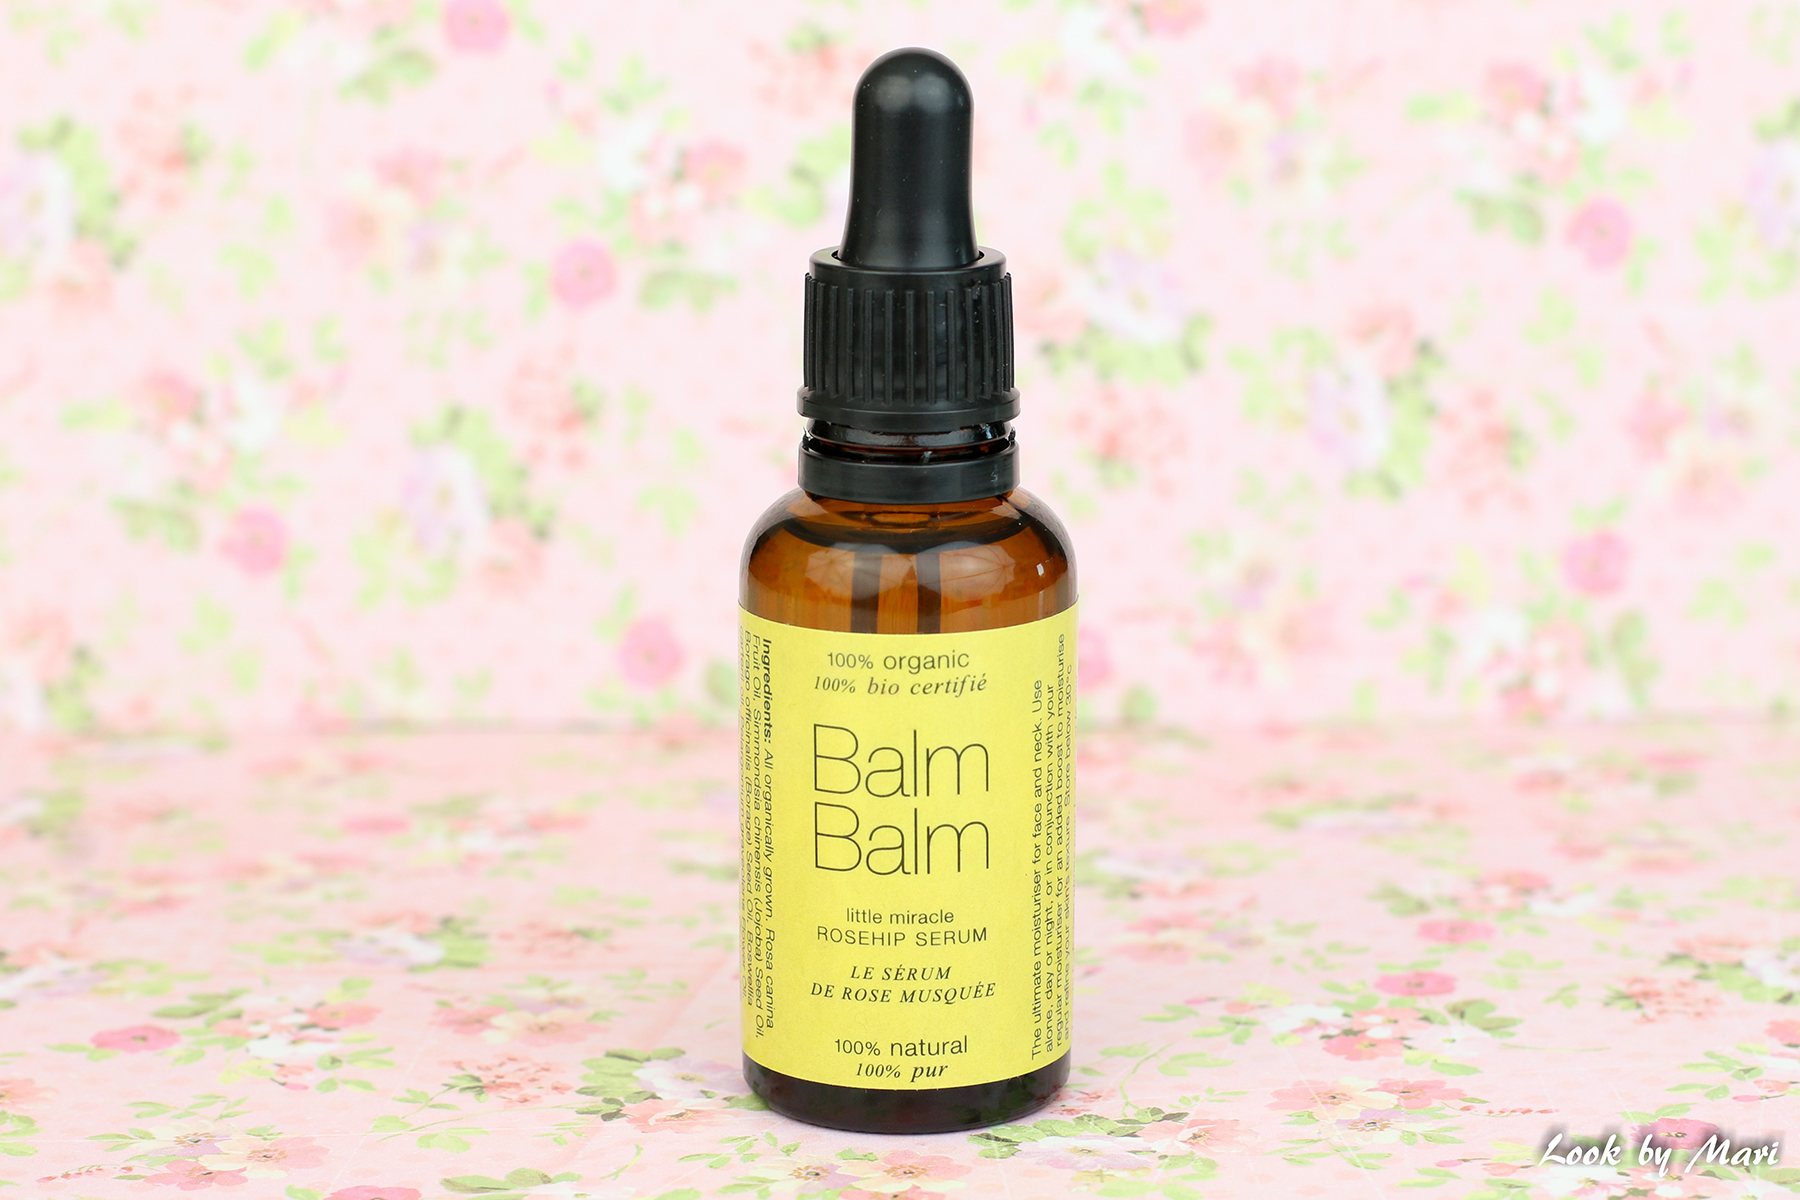 6 balm balm little miracle rosehip serum kokemuksia twistbe blogi